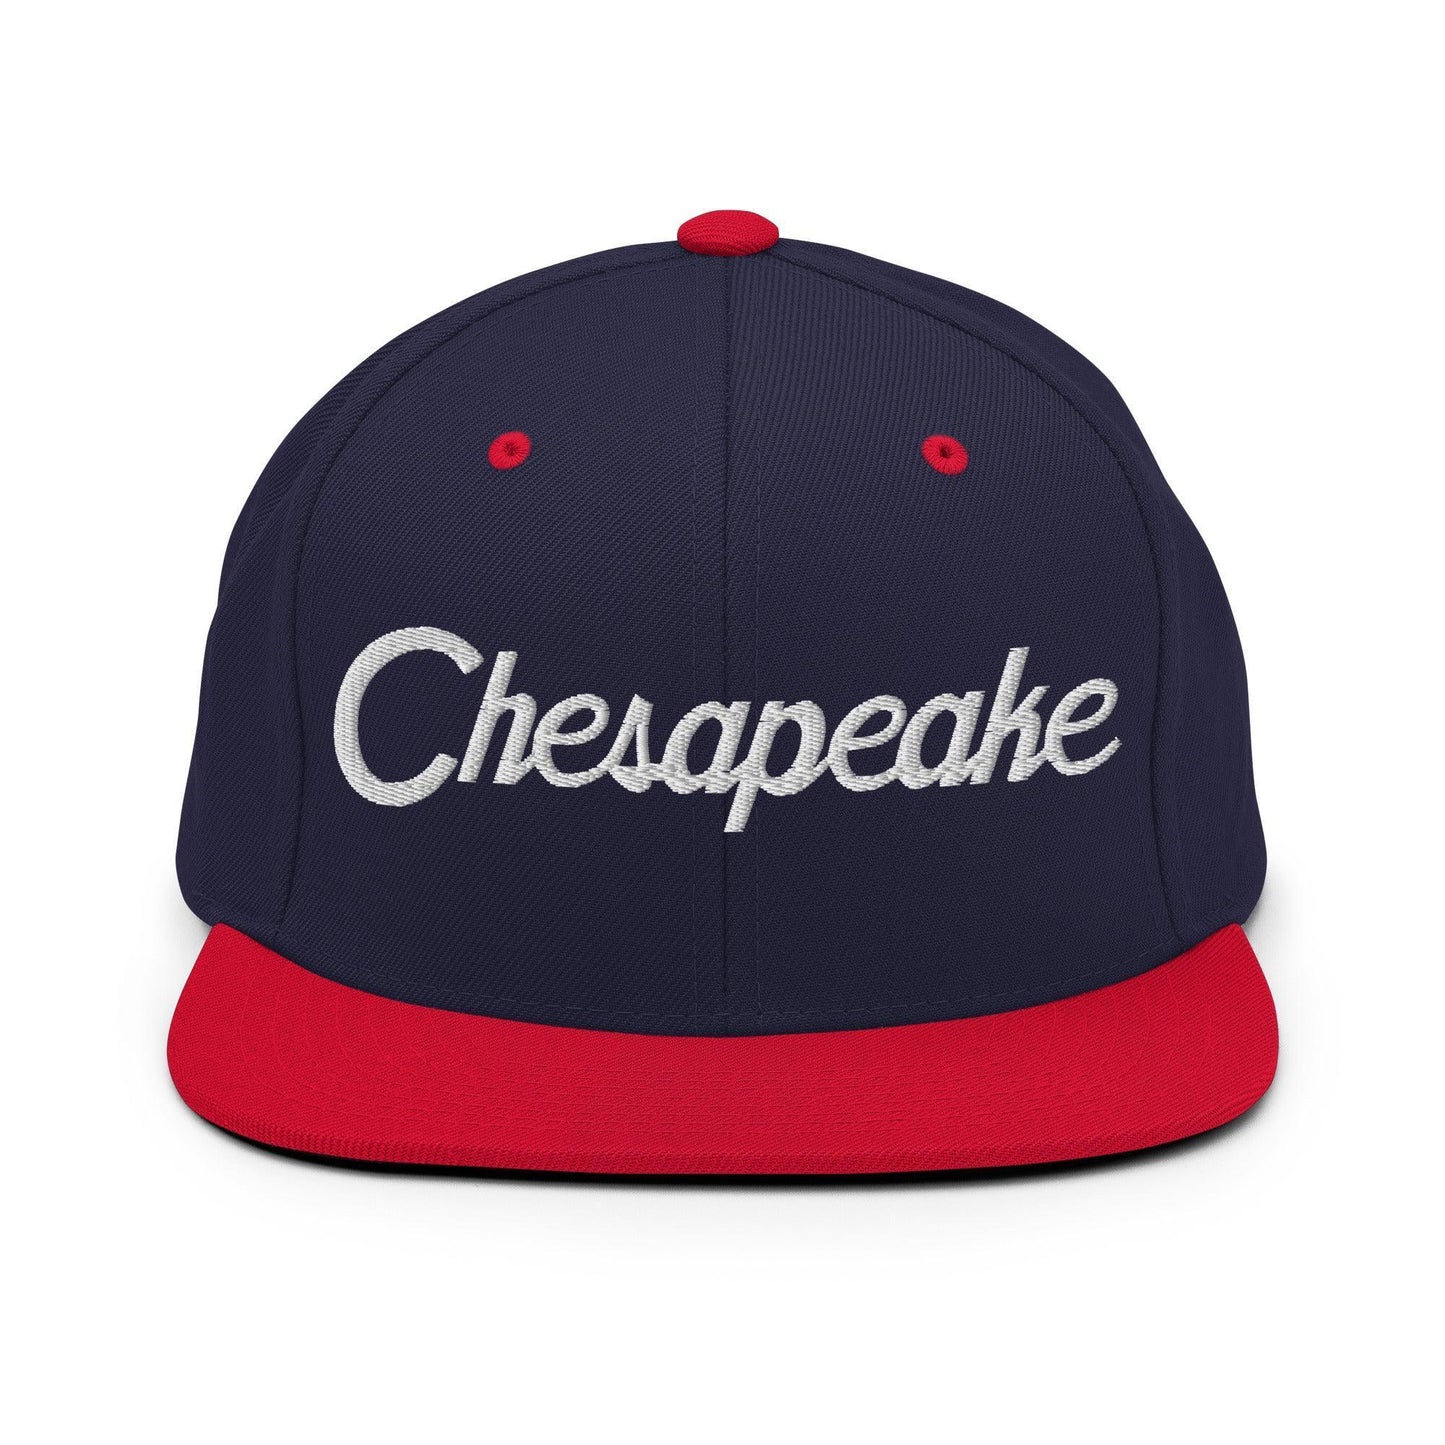 Chesapeake Script Snapback Hat Navy/ Red